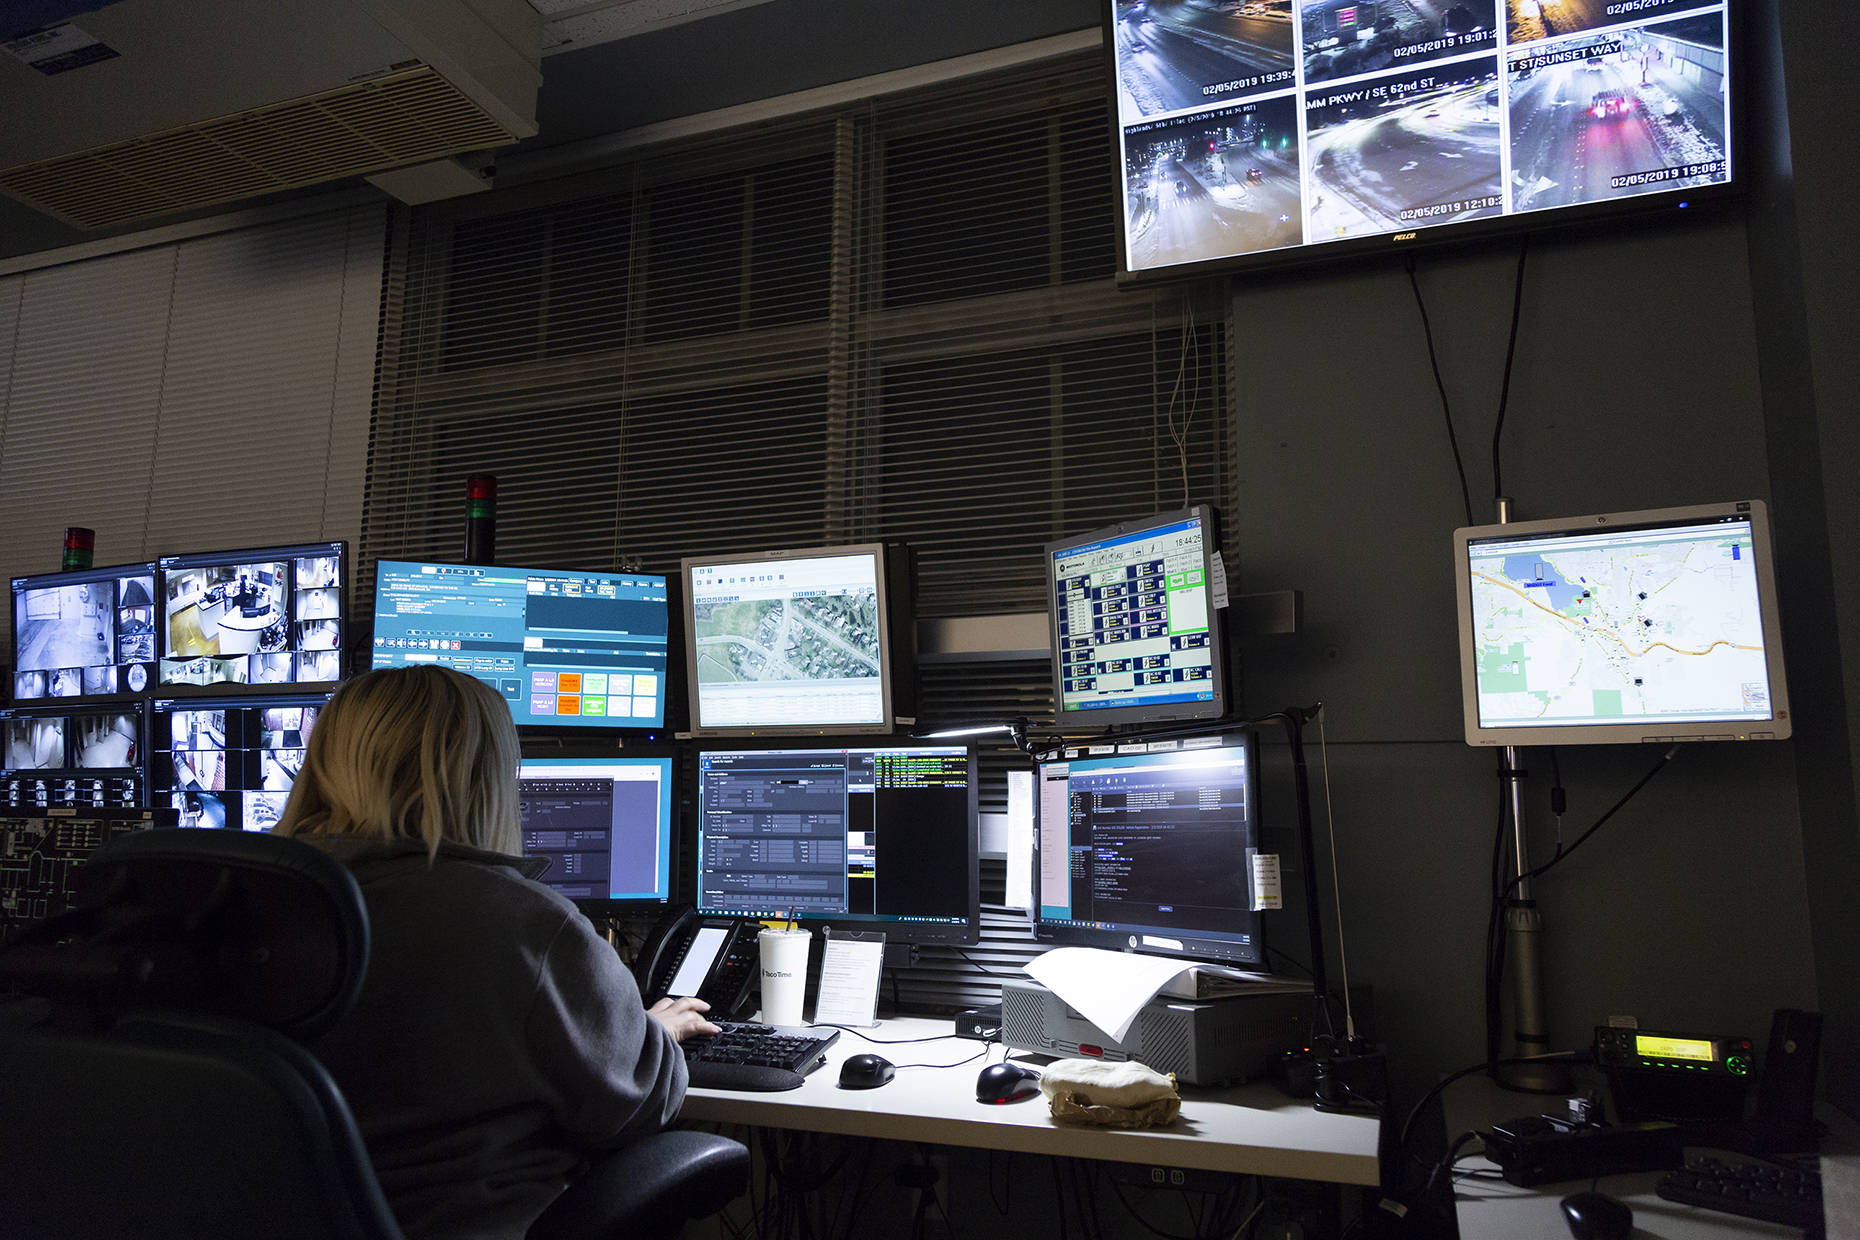 Moore monitors surveillance screens during her work day. Ashley Hiruko/staff photo